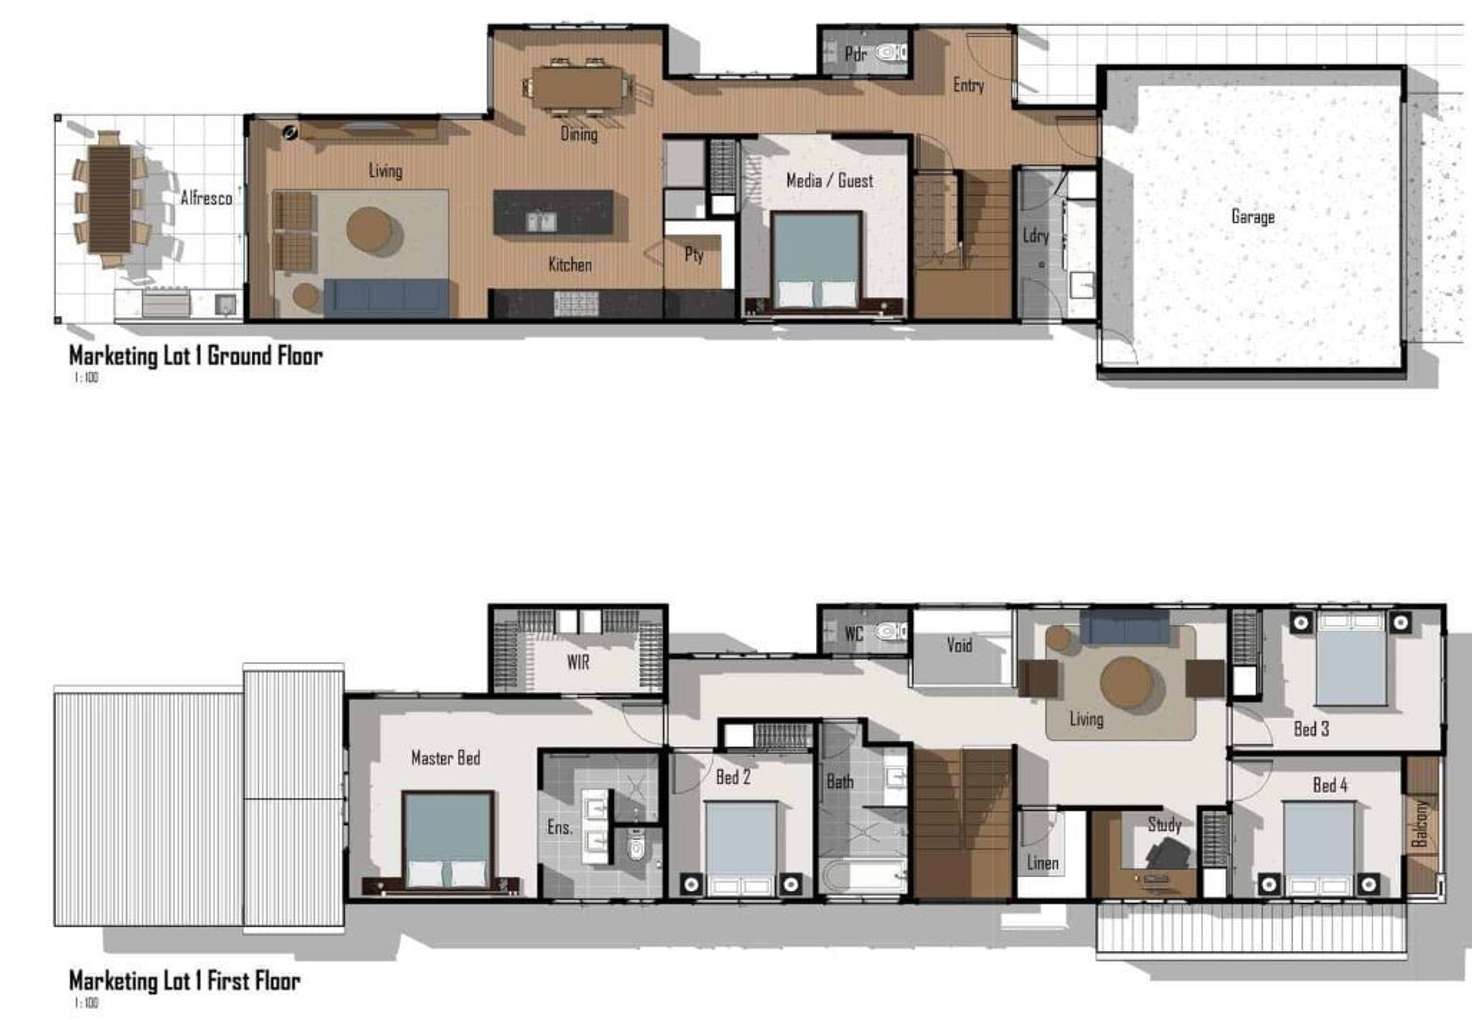 Floorplan of Homely house listing, 47 Gotha Street, Camp Hill QLD 4152